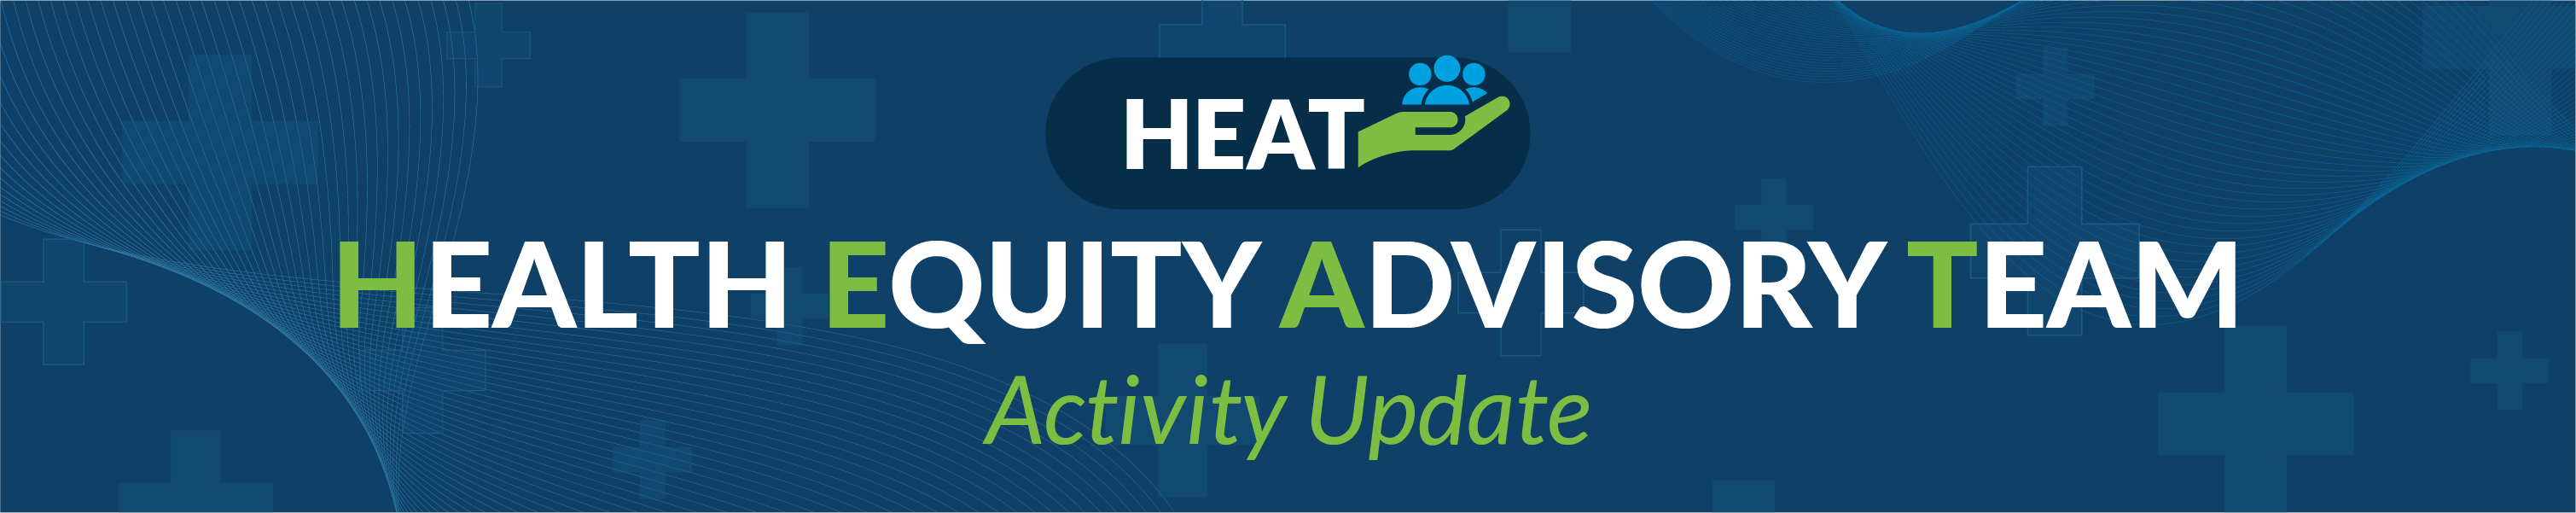 Health Equity Advisory Team Activity Update